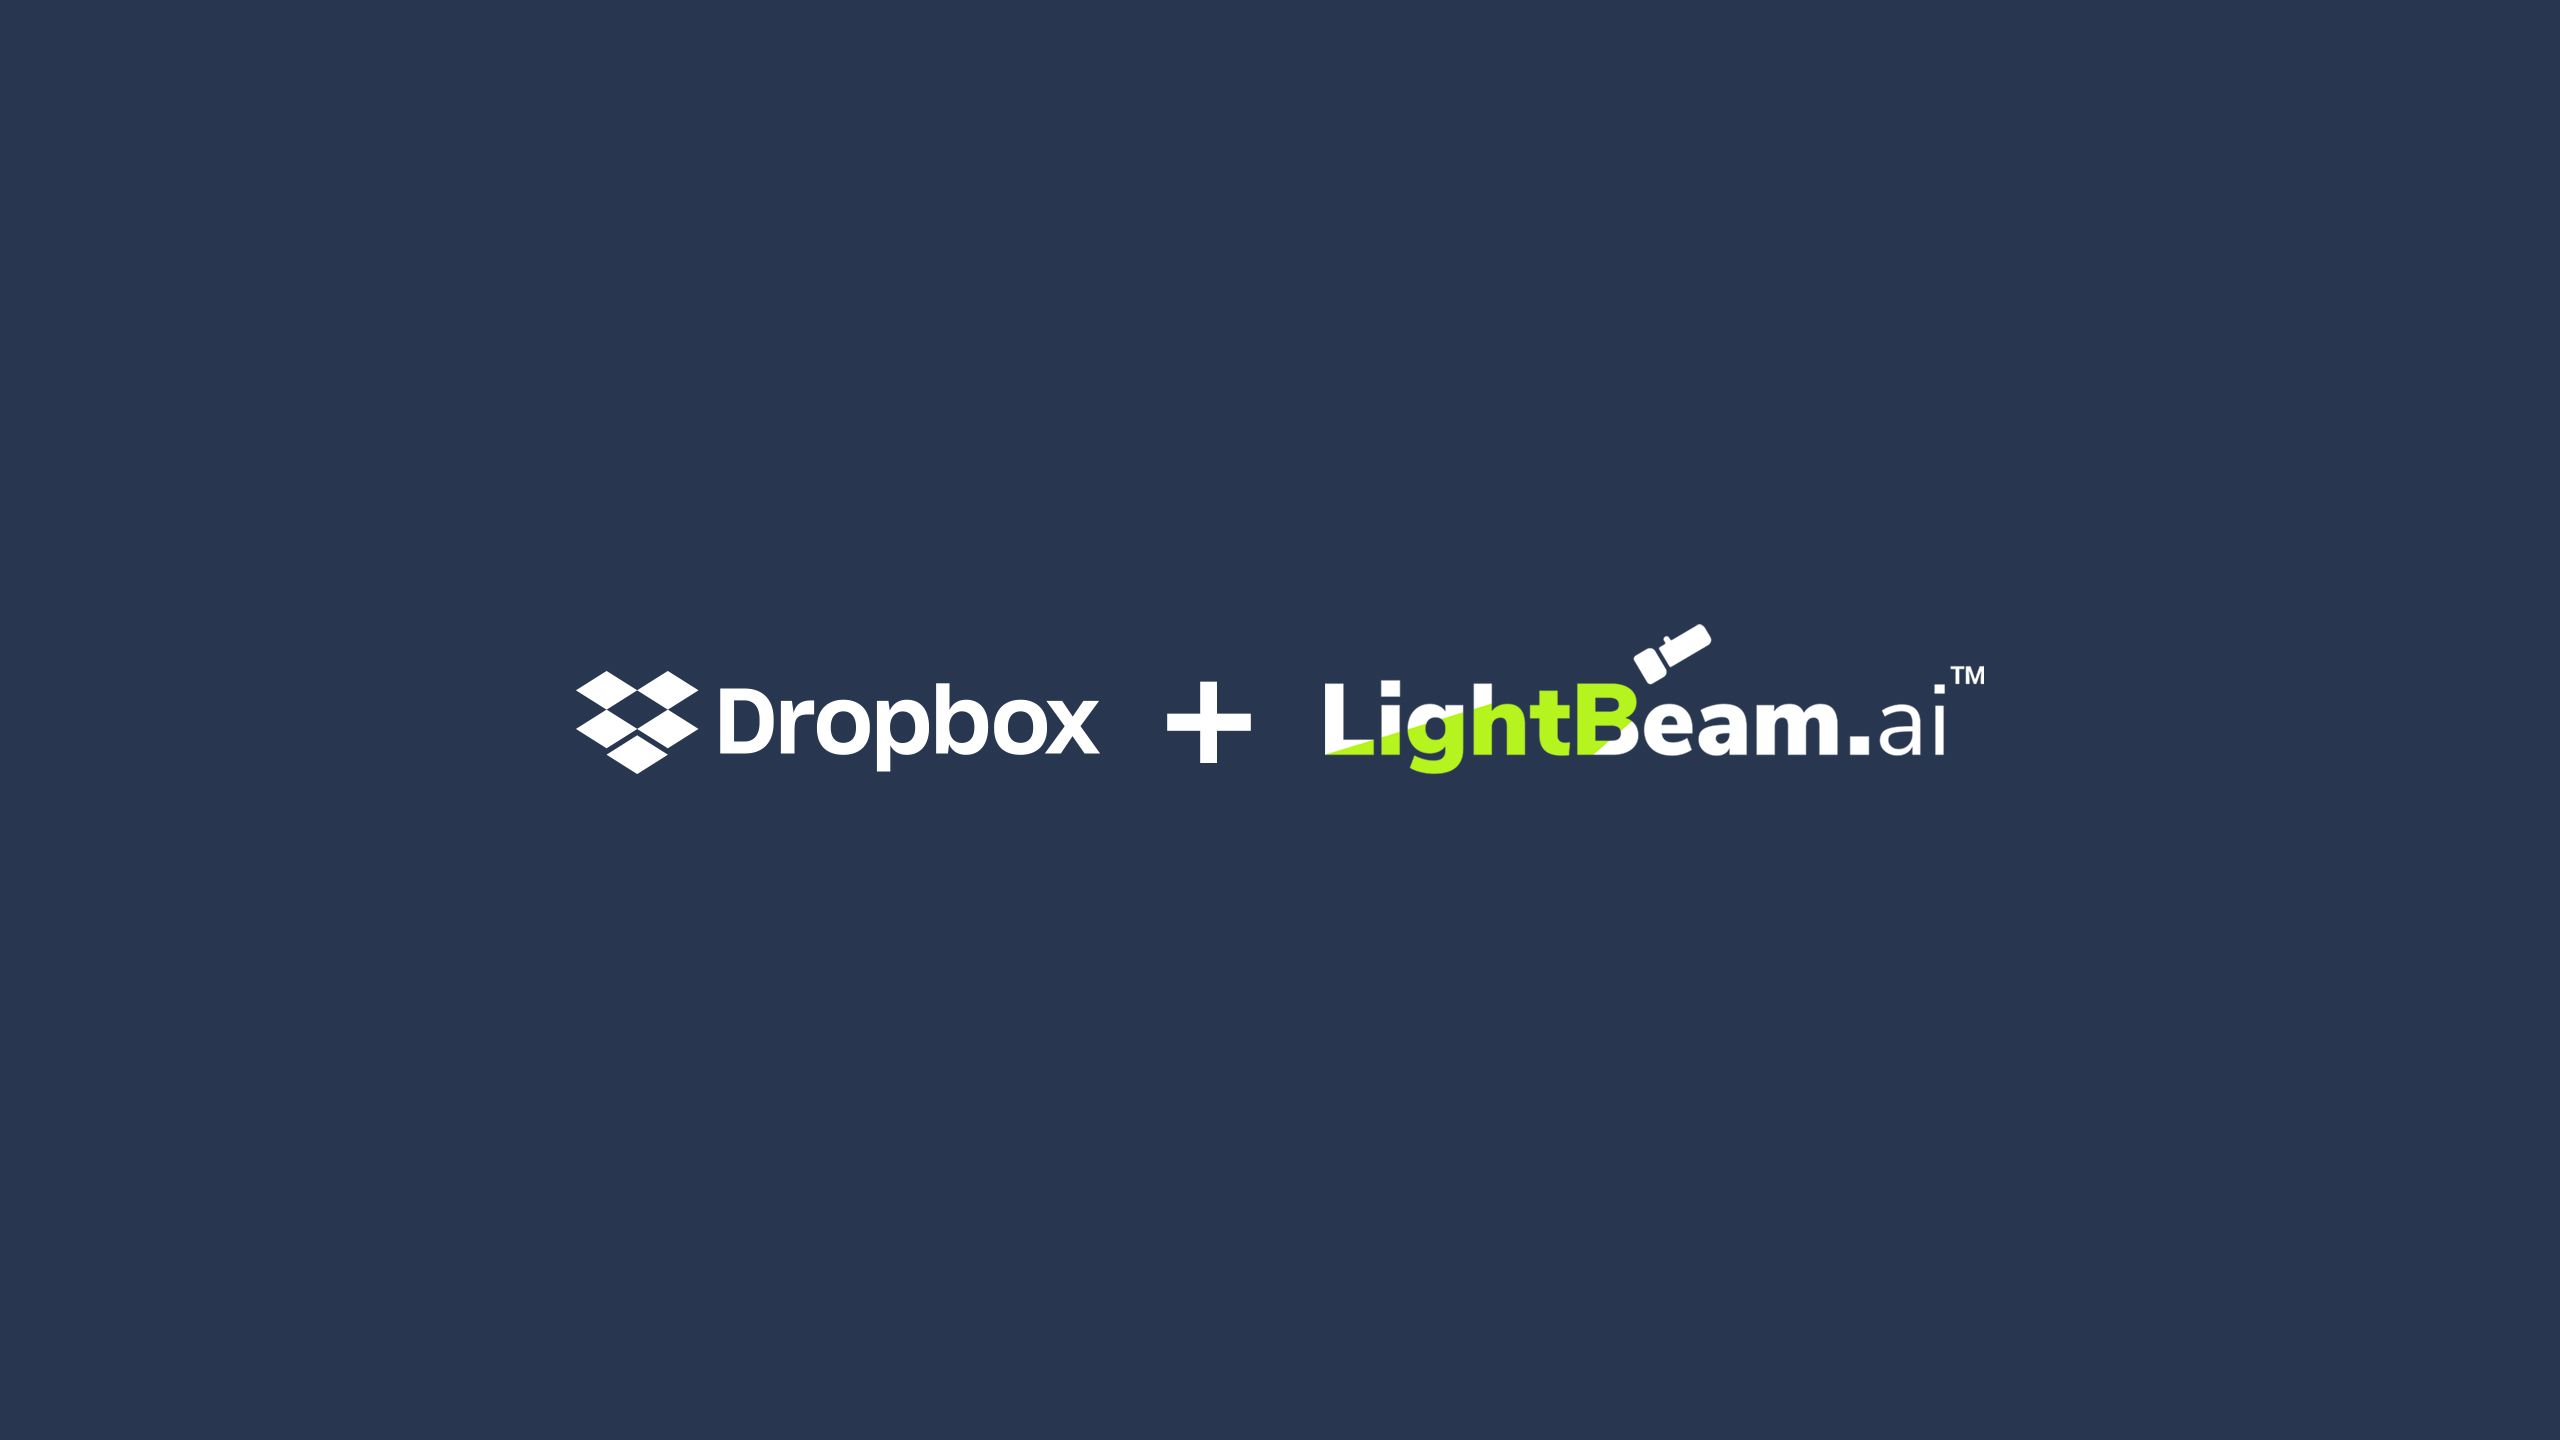 Lockup of Dropbox and LightBeam.ai logos